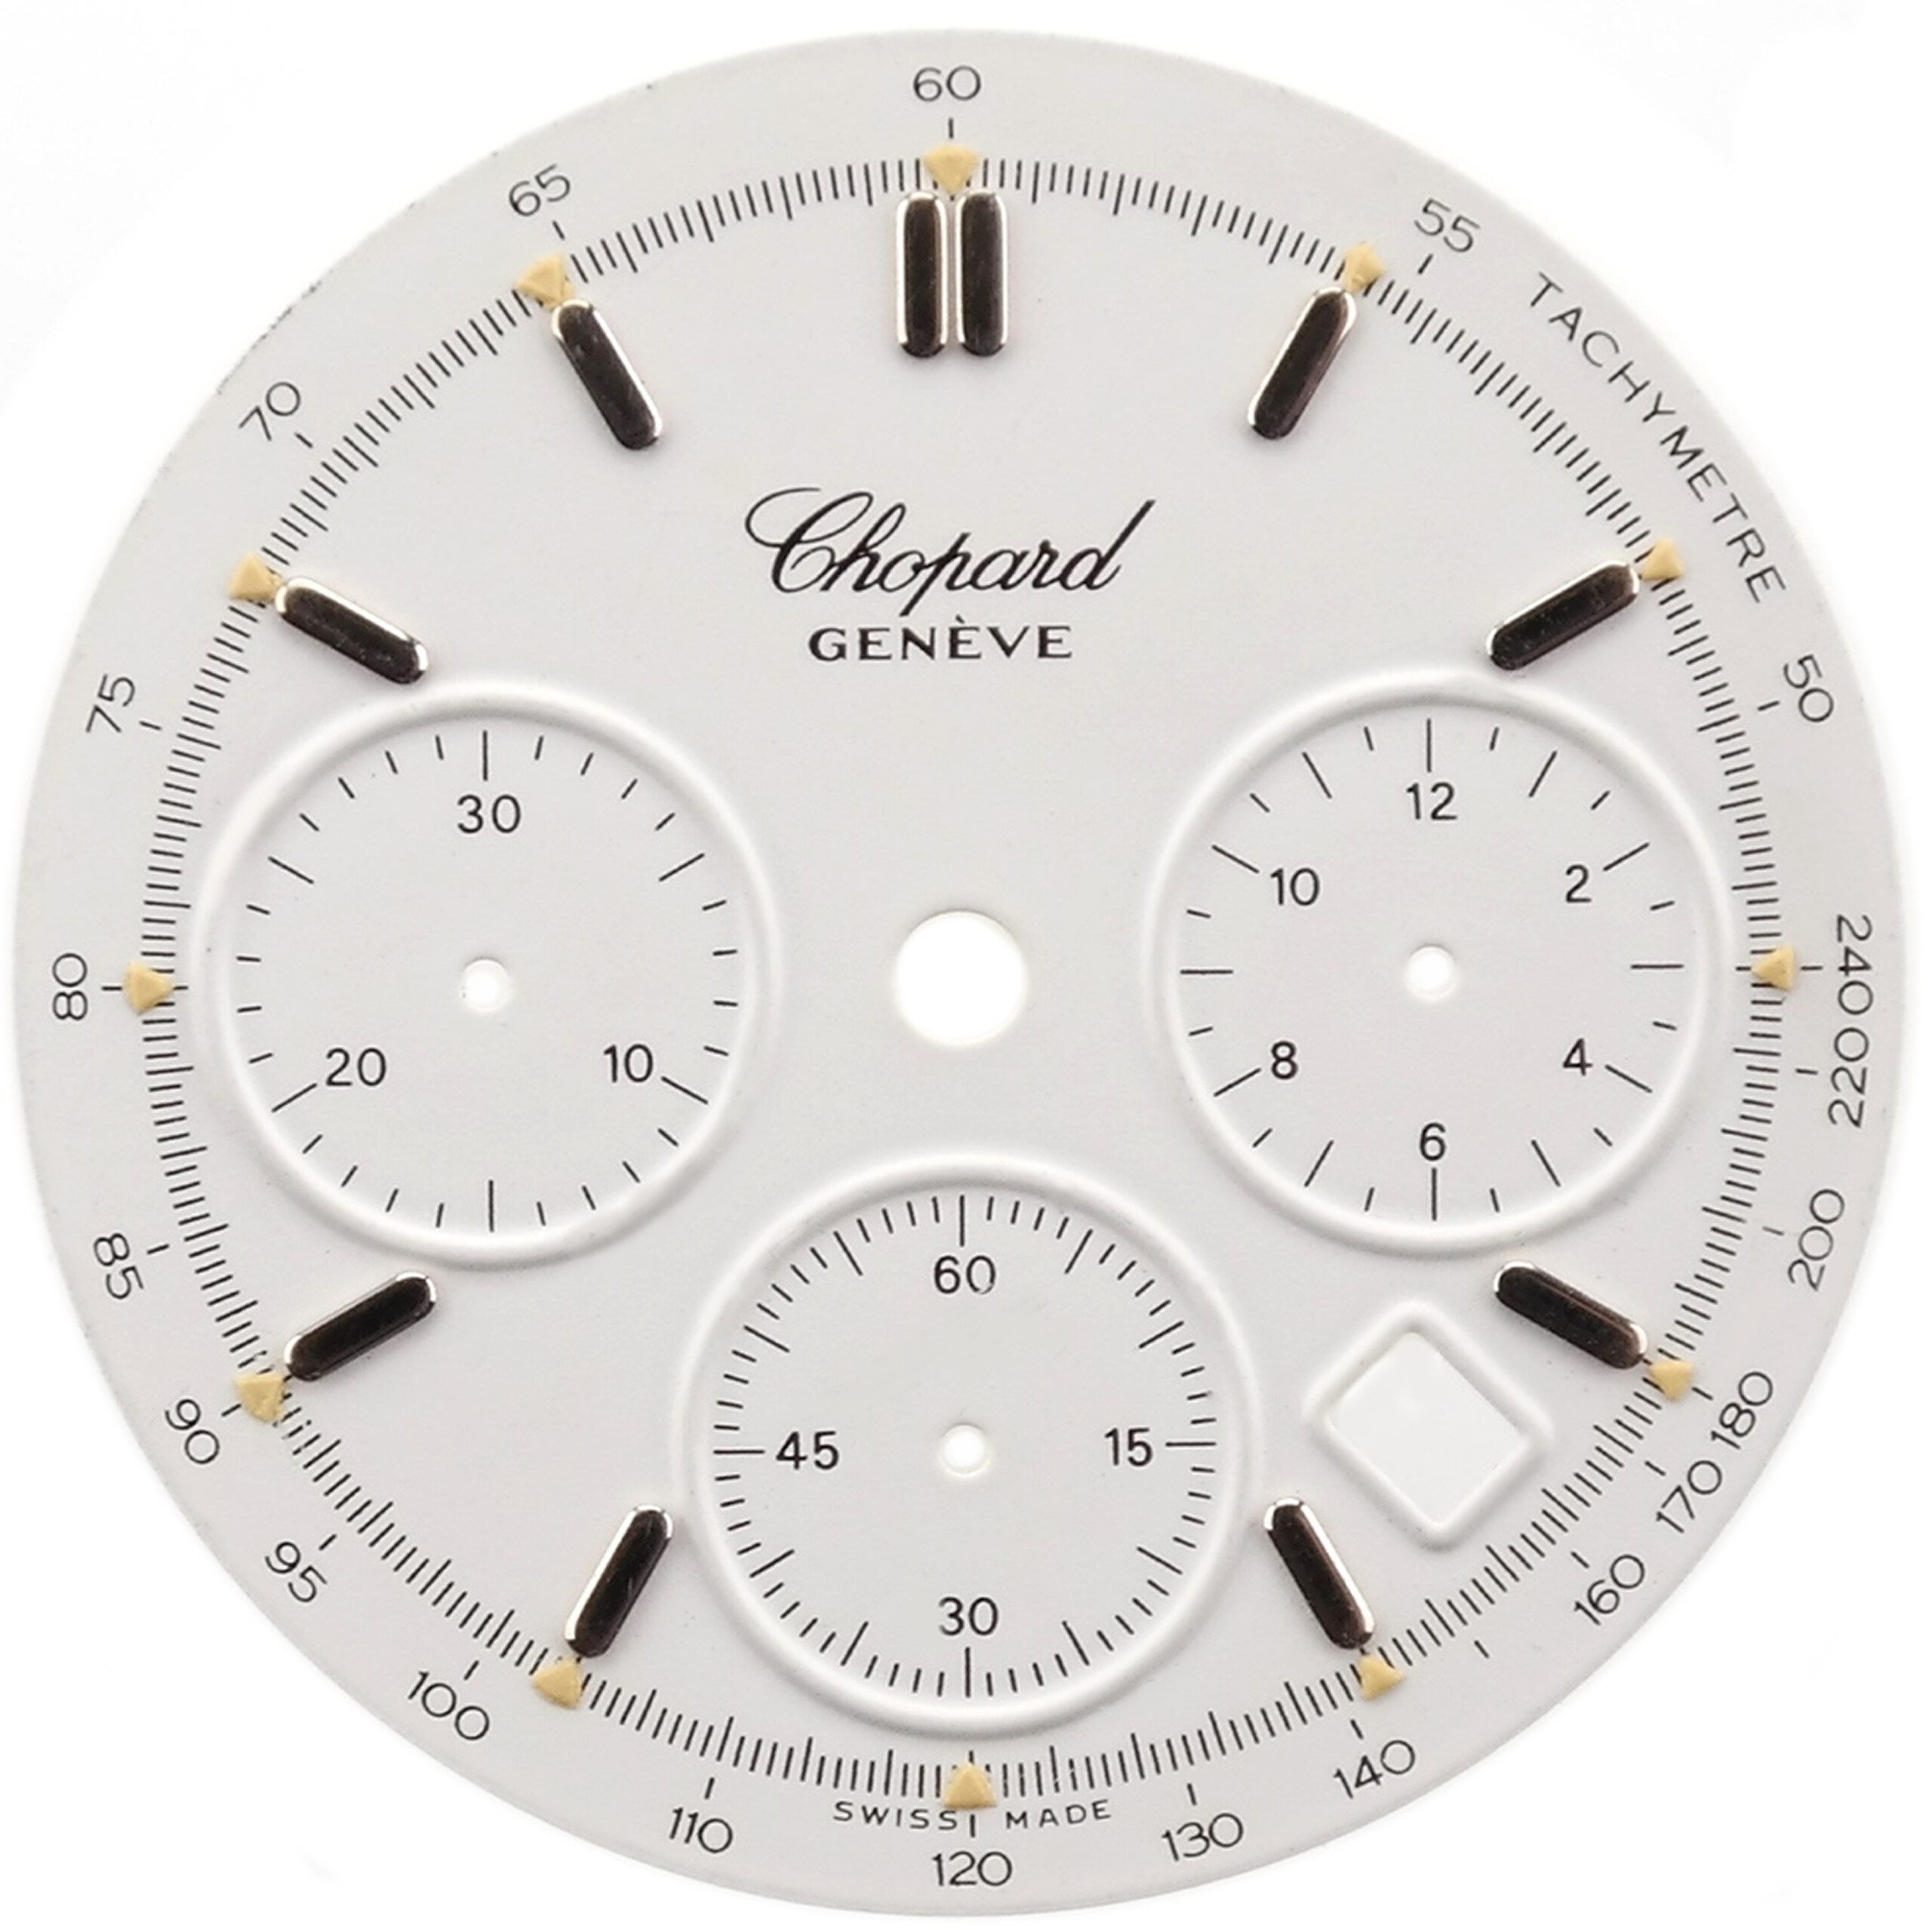 CHOPARD - Mille Miglia - MecaQuartz - Ref. 1201 - Watch Dial - 1990s